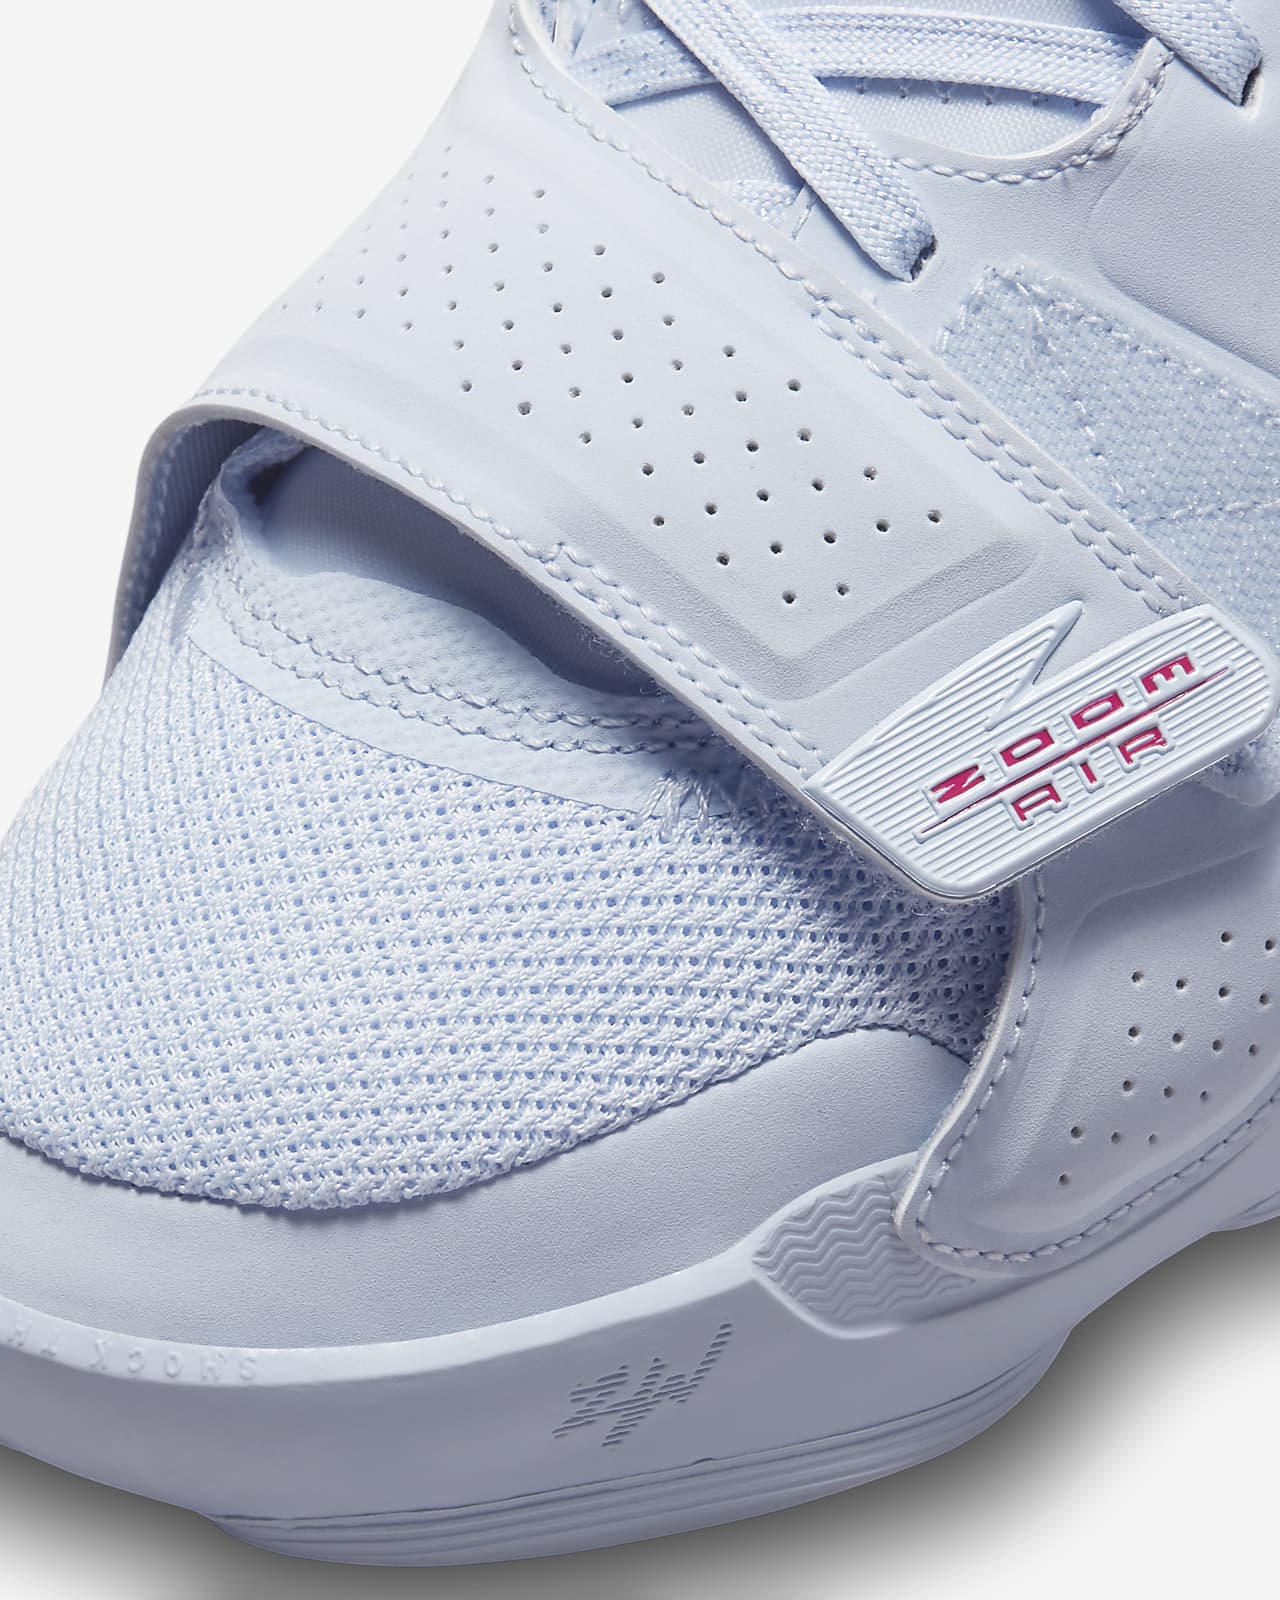 Zion 2 Shoes. Nike